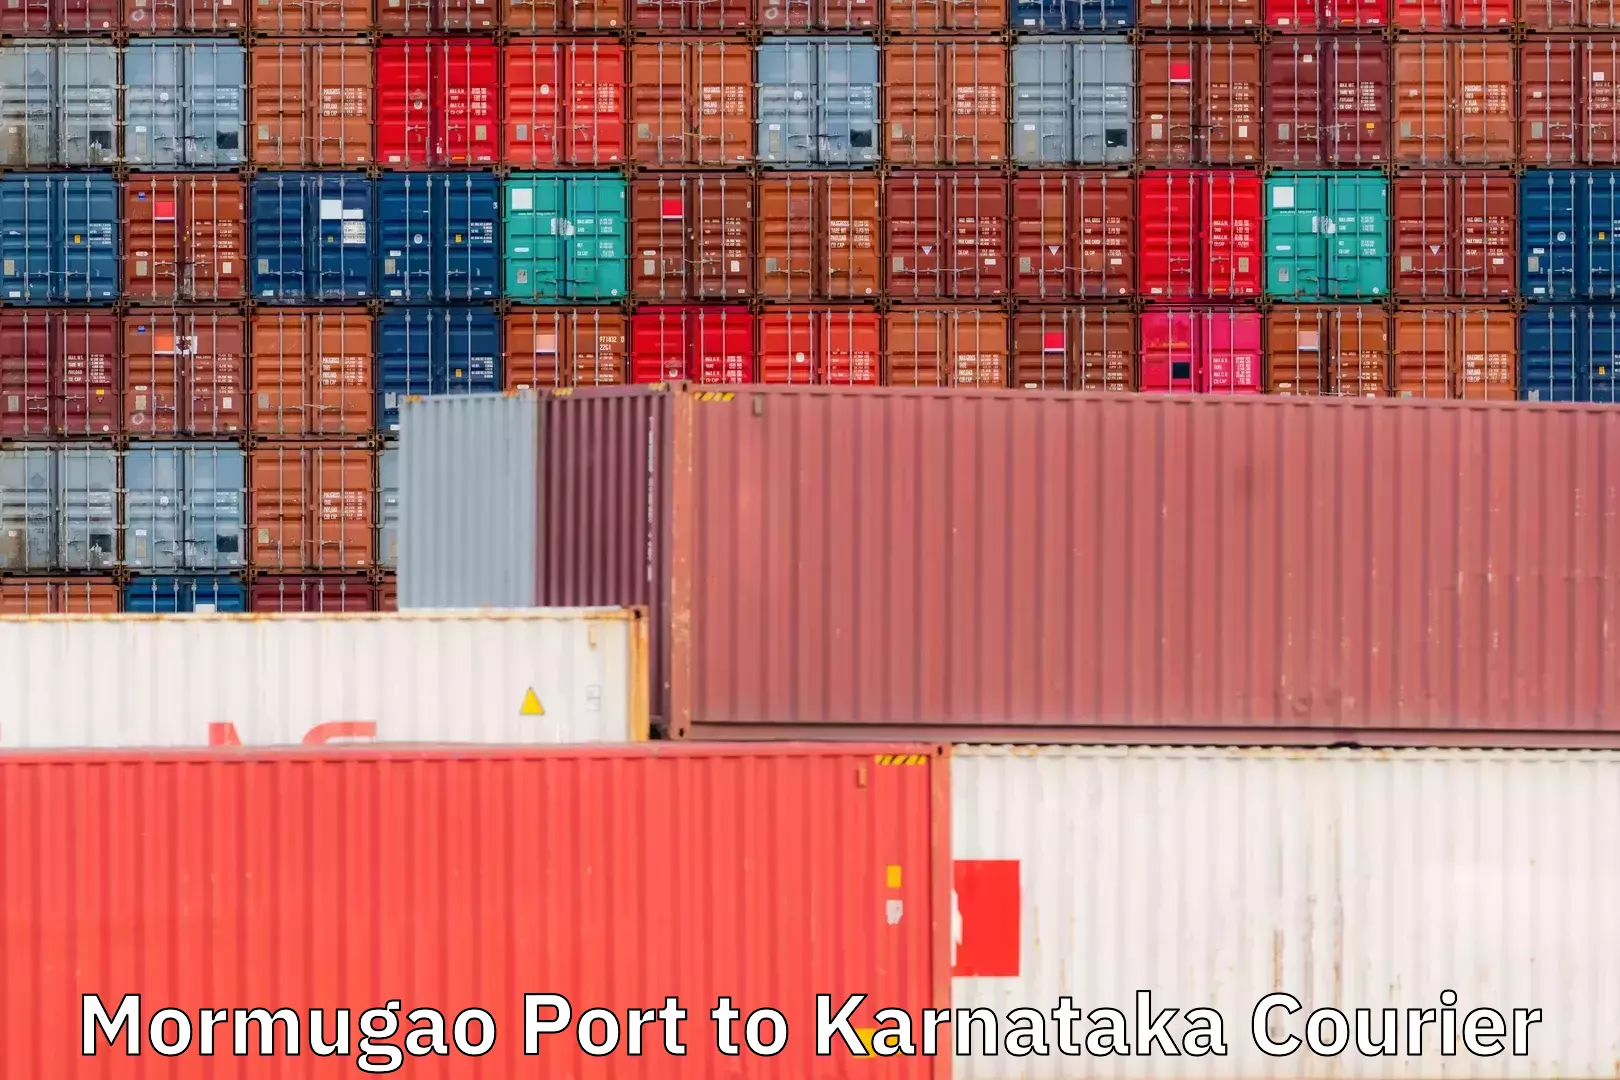 Short distance delivery in Mormugao Port to Karnataka